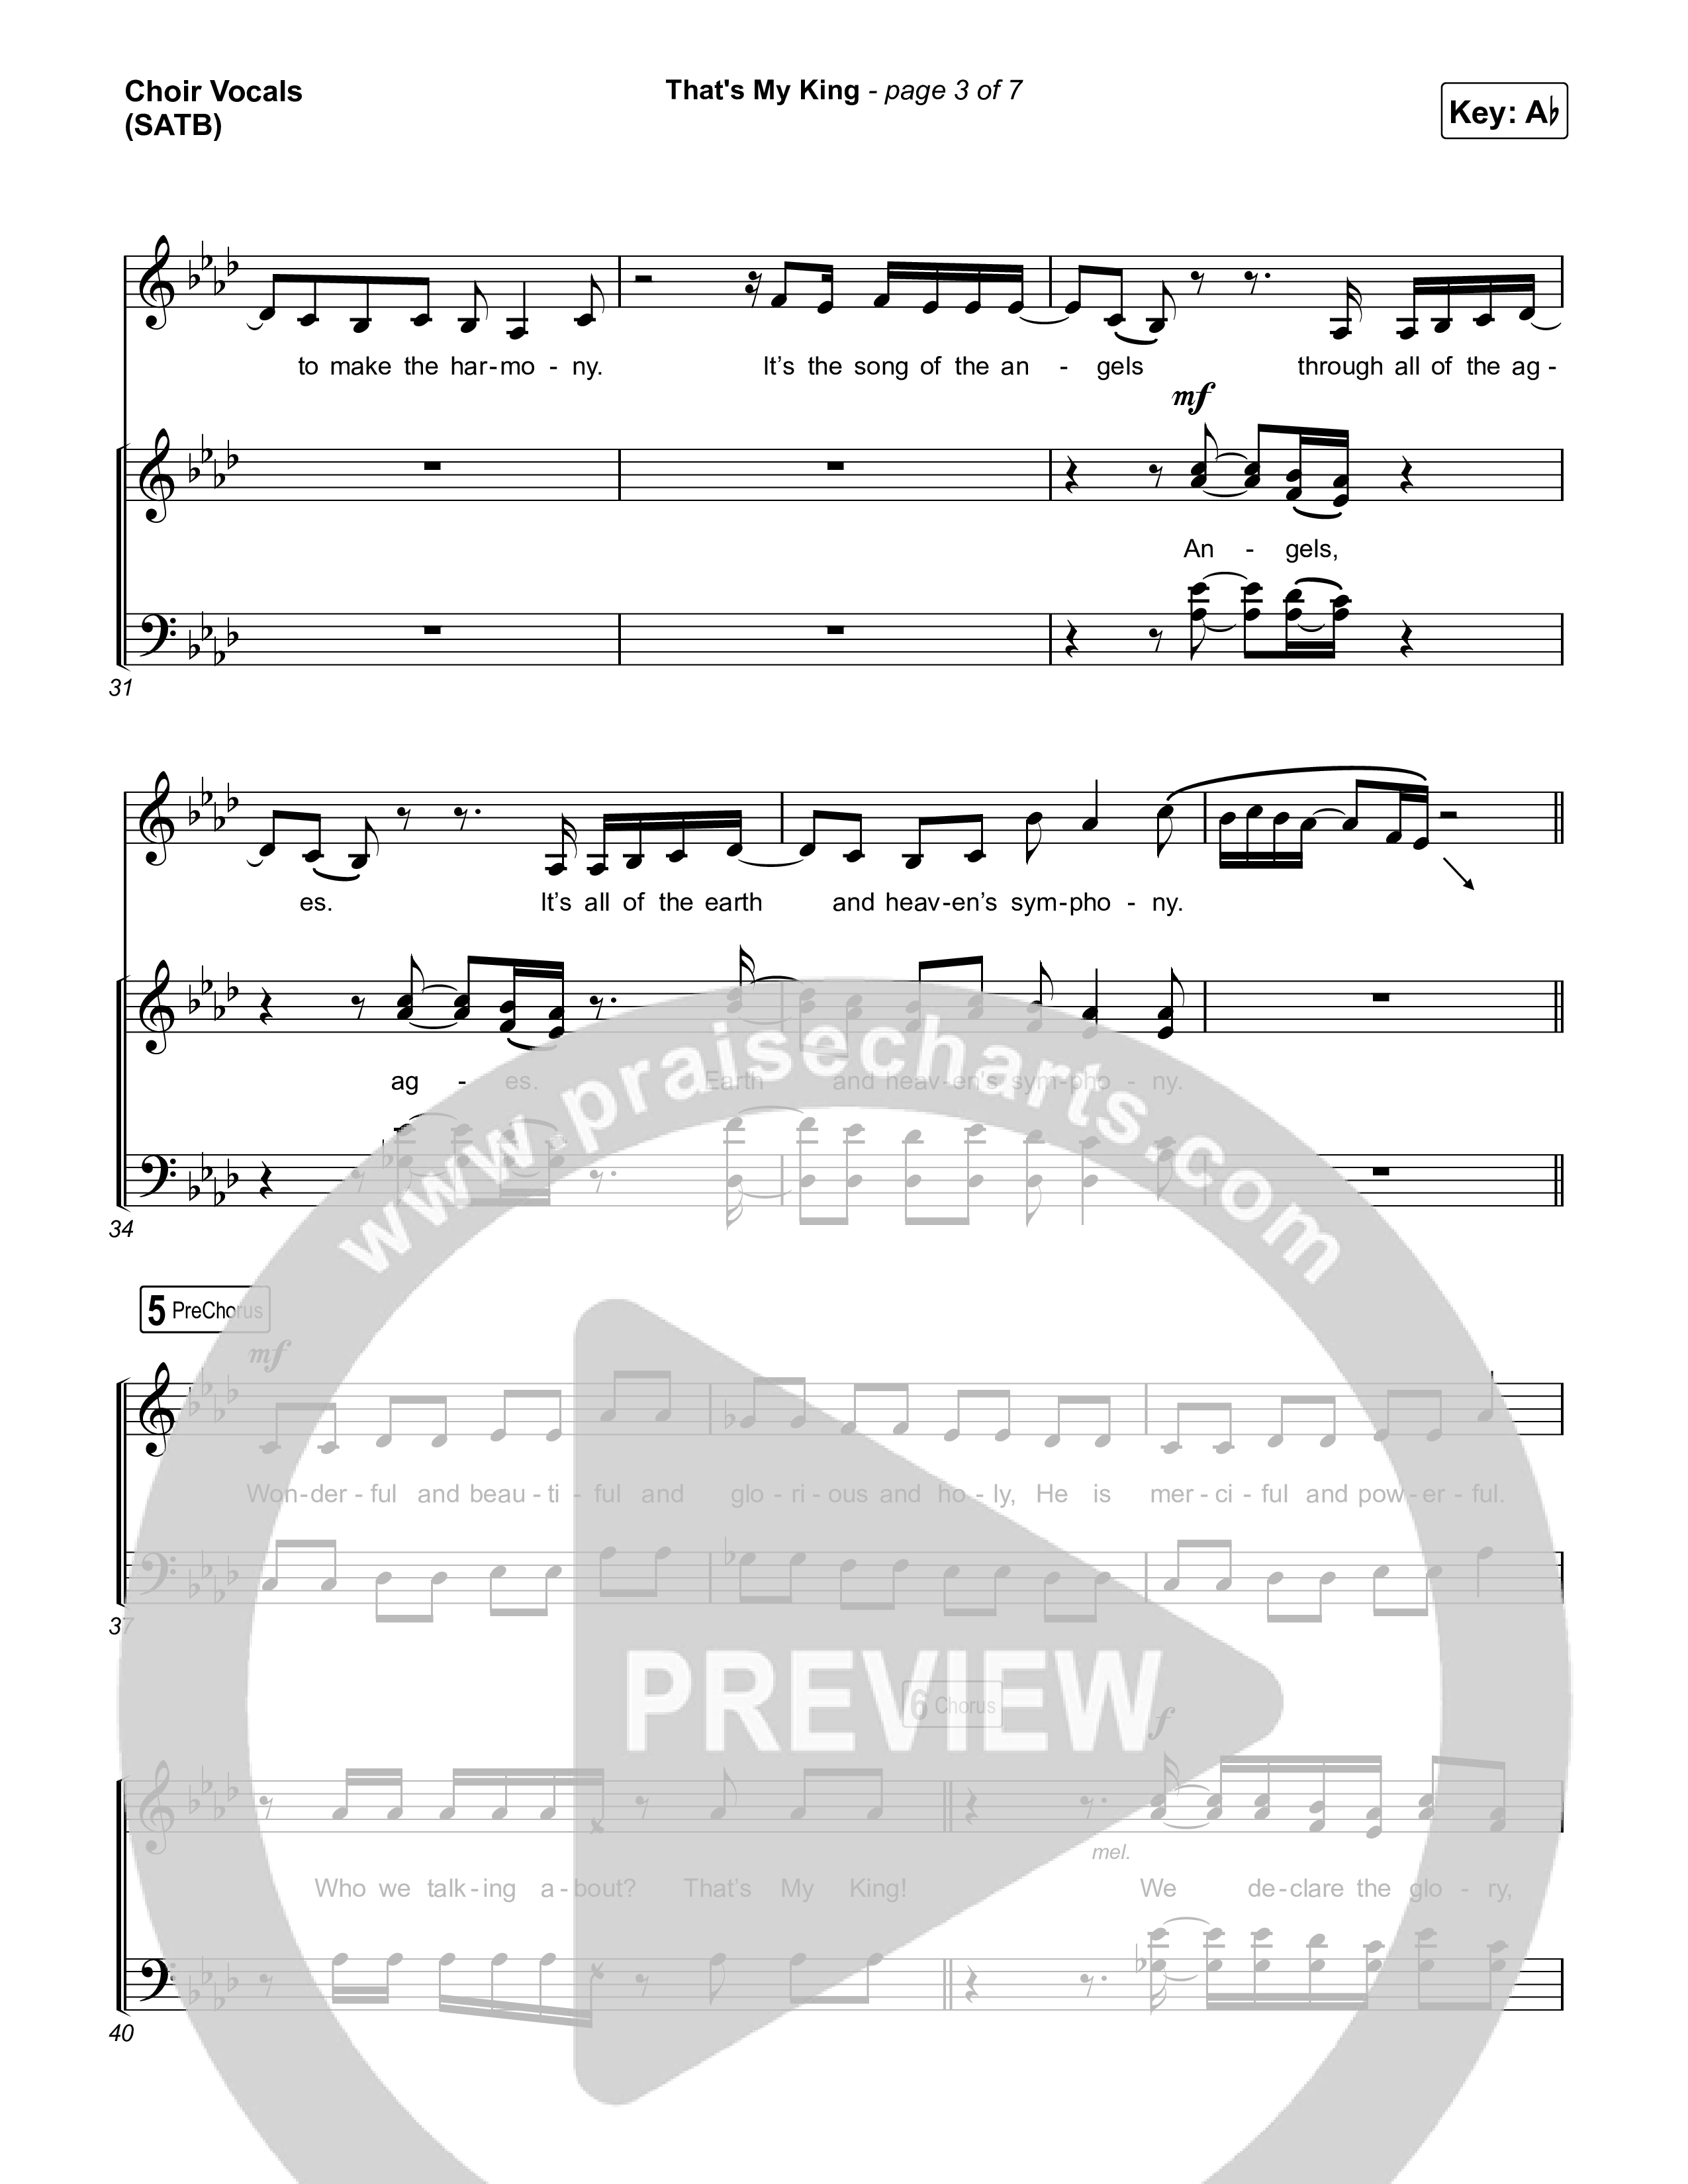 That's My King (Choral Anthem SATB) Choir Sheet (SATB) (CeCe Winans / Arr. Luke Gambill)